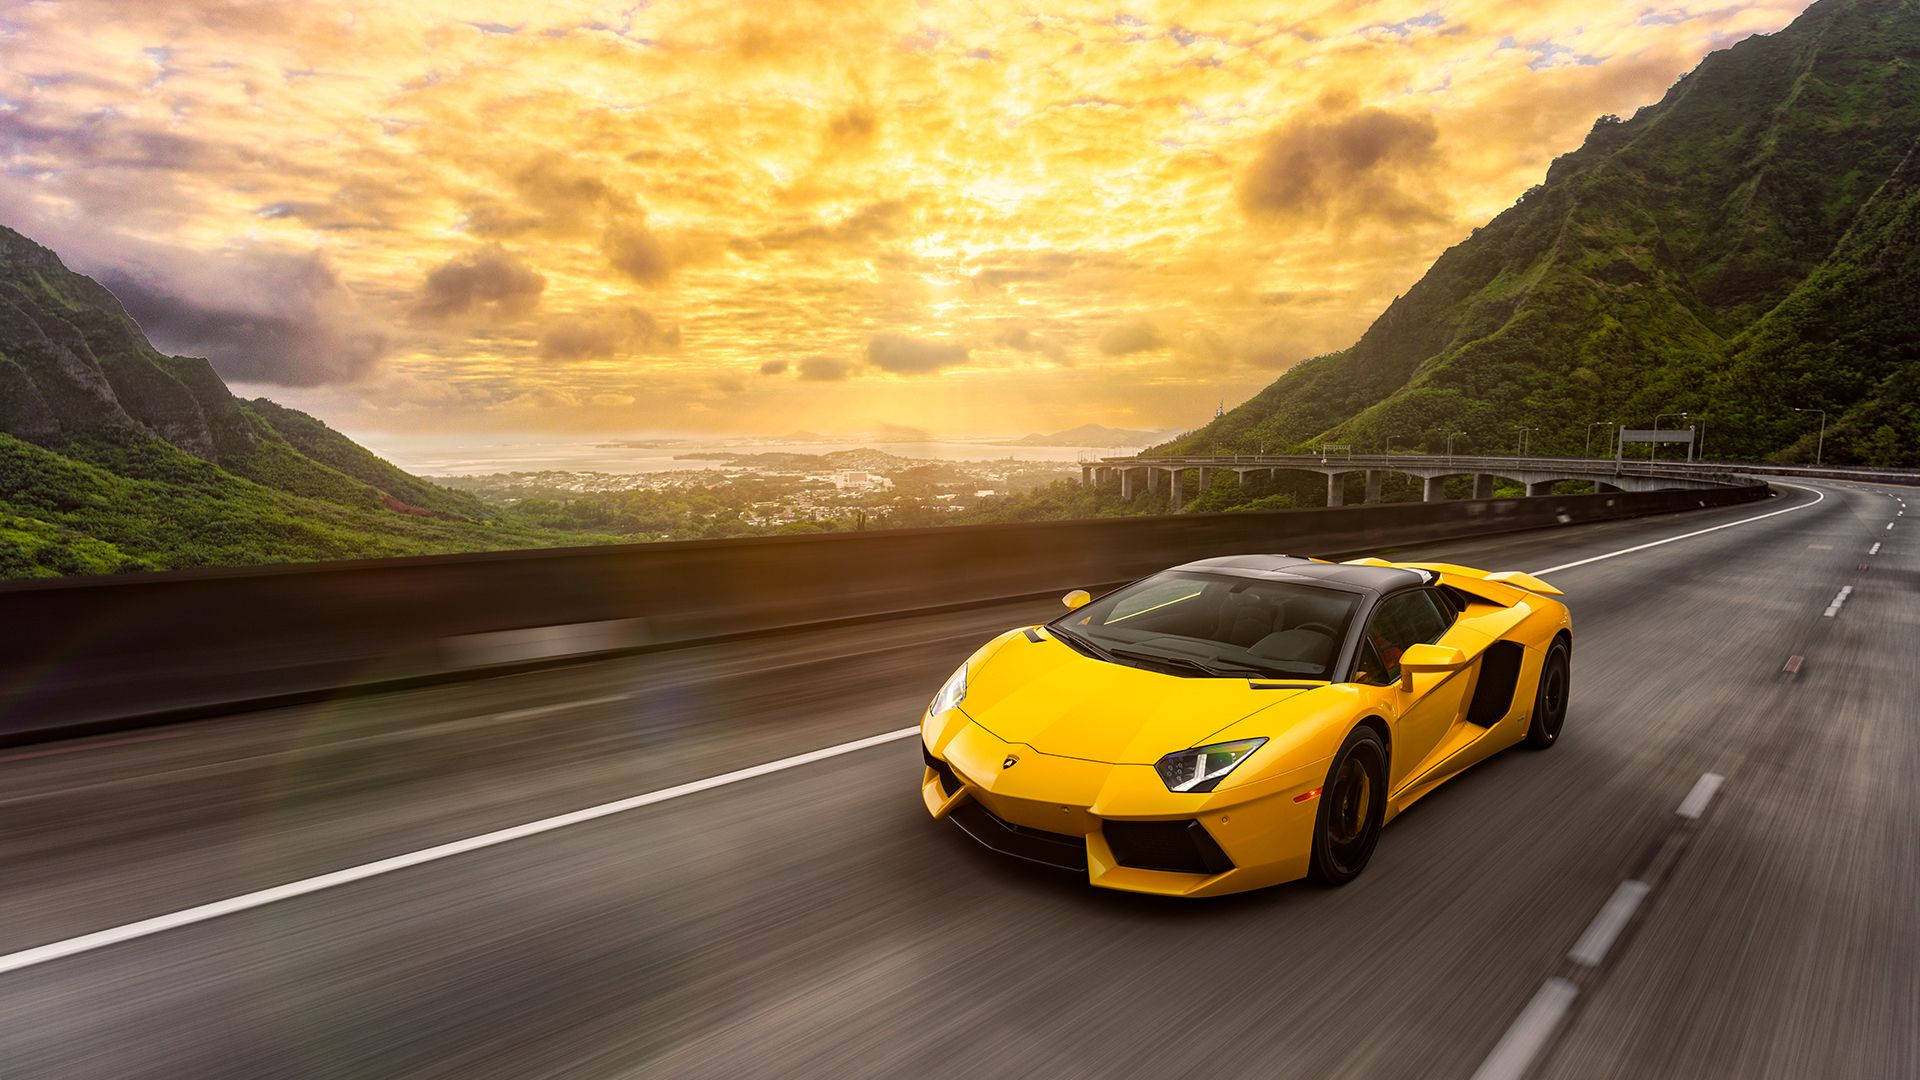 A Yellow Lamborghini Aventador In Motion. Wallpaper